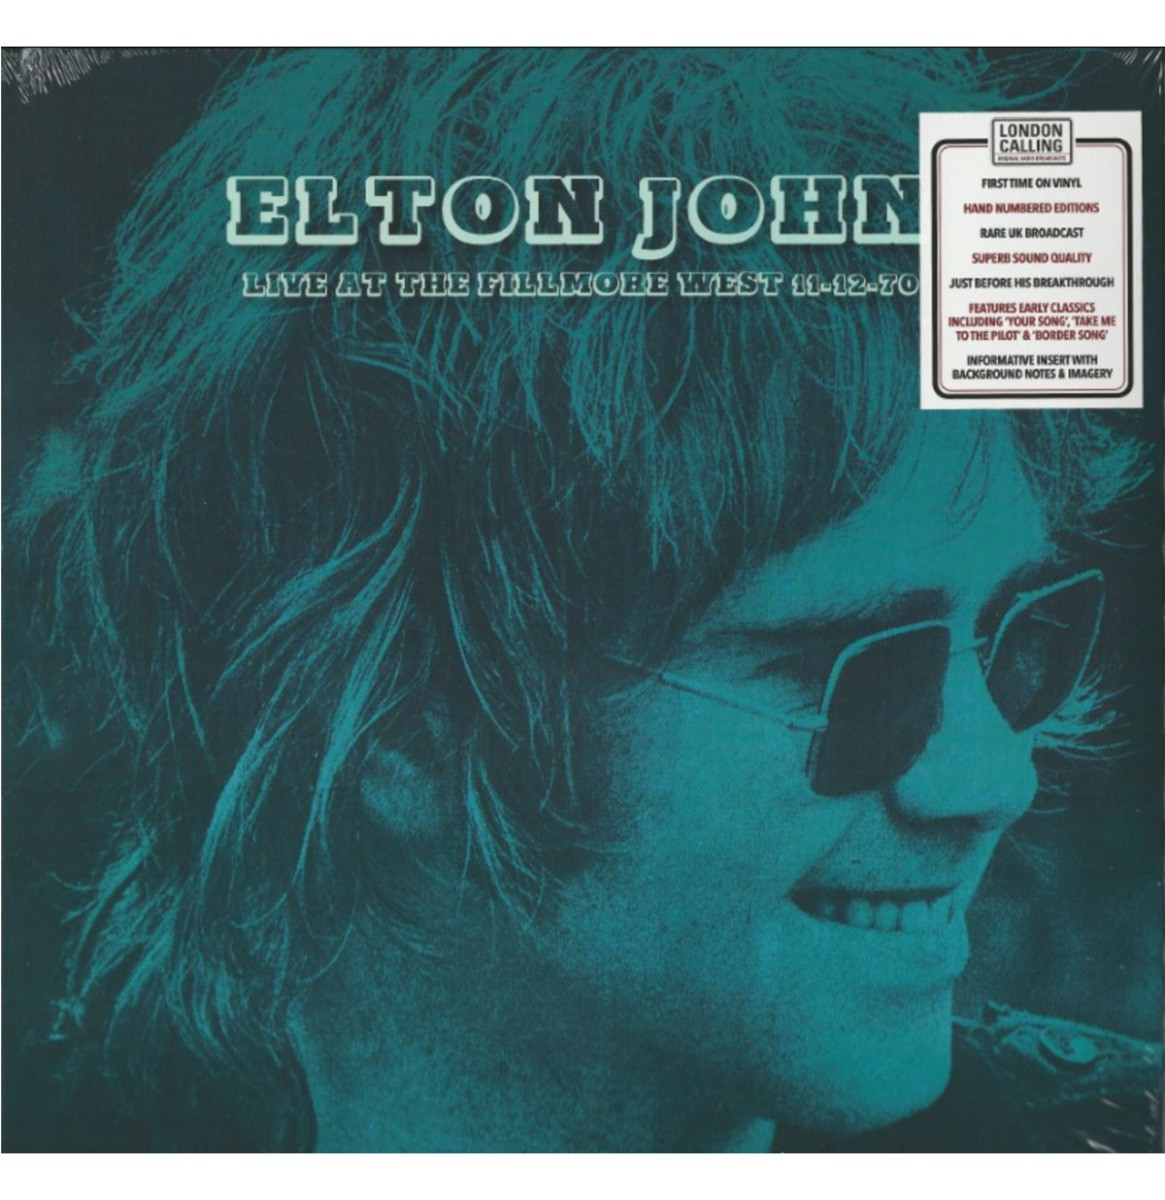 Elton John - Live At The Fillmore West 11-12-70 LP